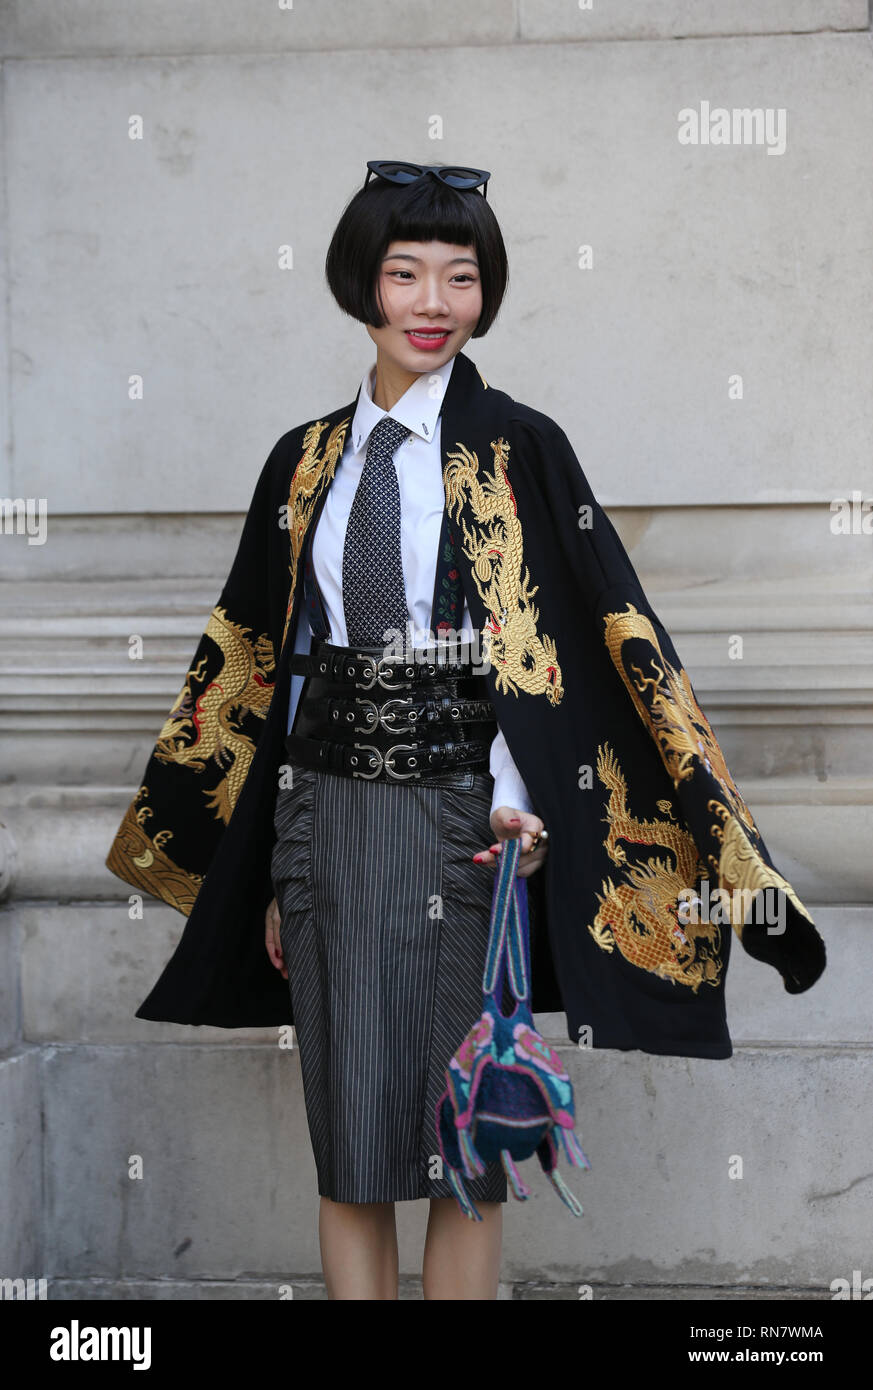 A fashionista wearing an oriental themed jacket during the Autumn/Winter 2019 London Fashion Week outside Freemasons' Hall, London. Stock Photo